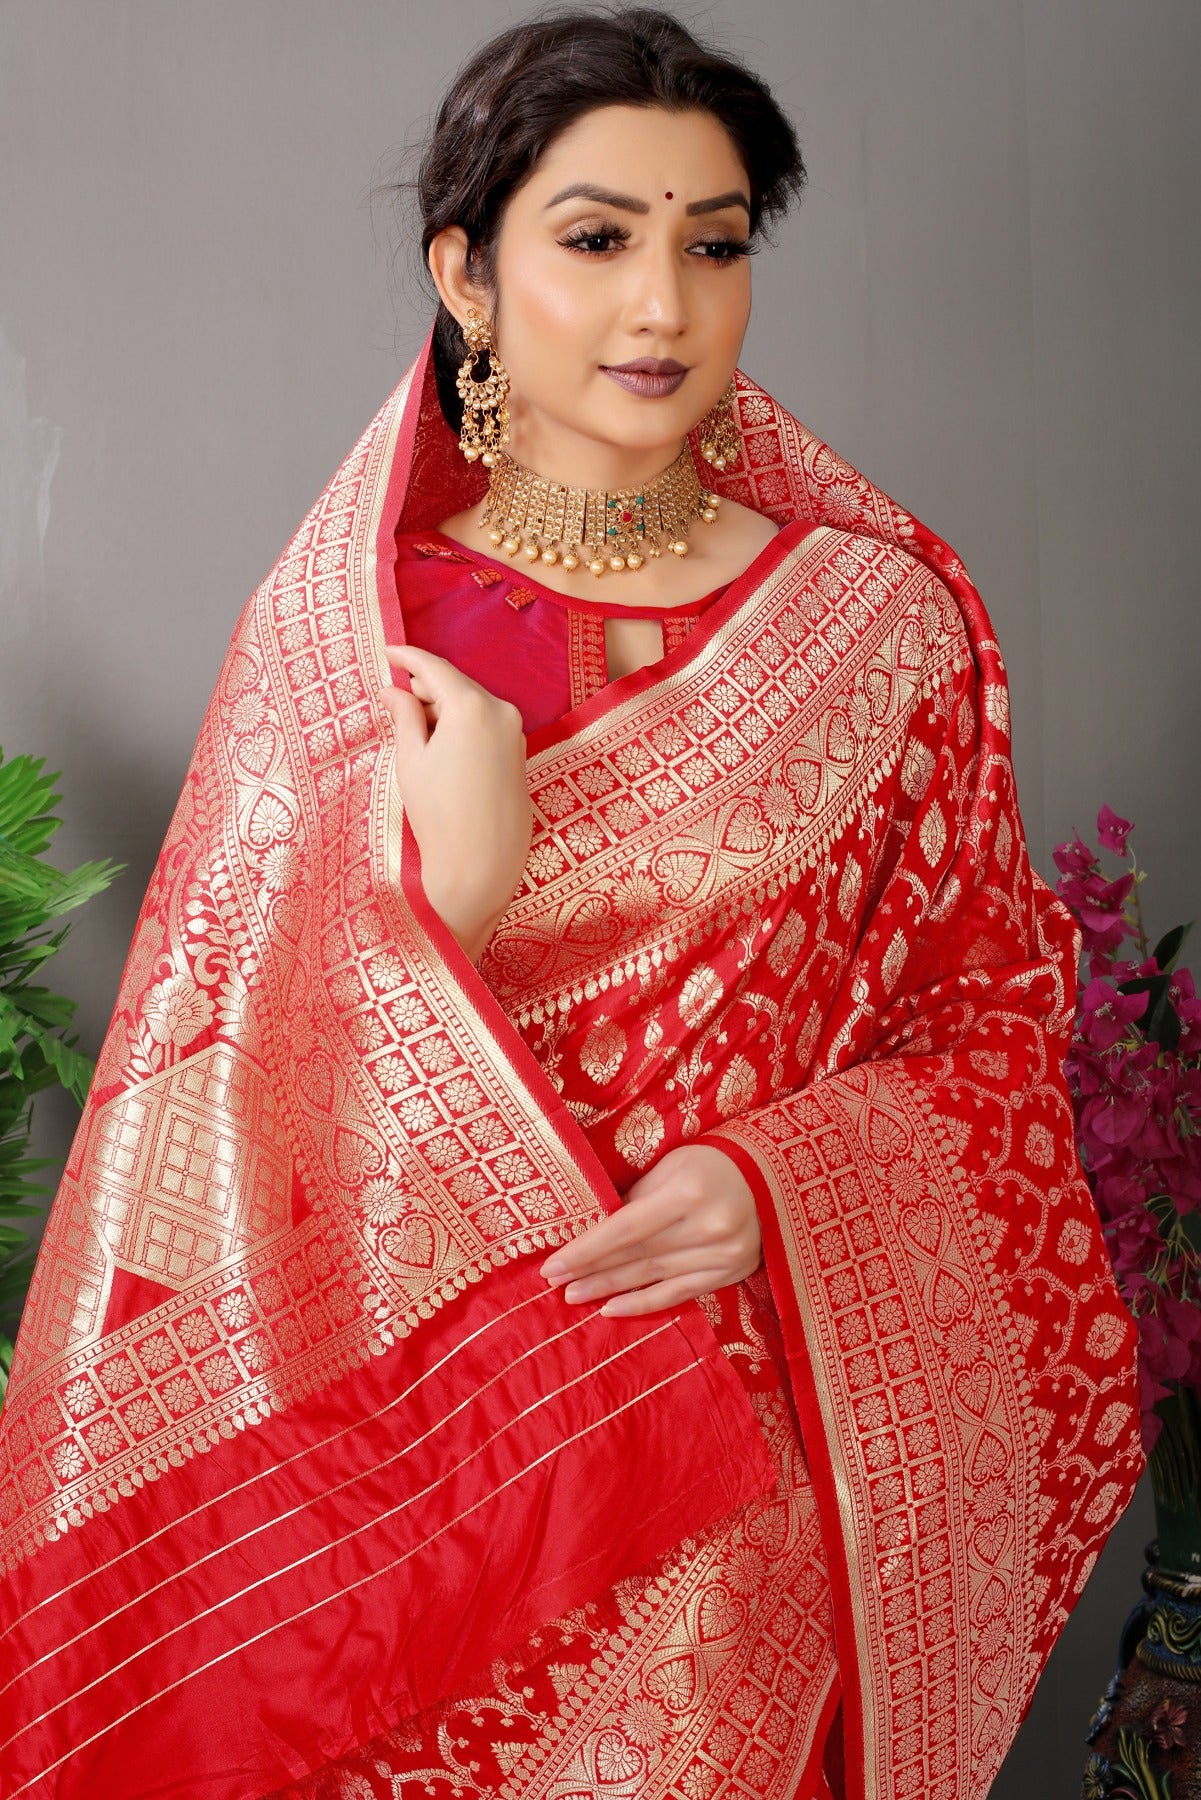 Impressive Red Banarasi Silk Saree With Fairytale Blouse Piece